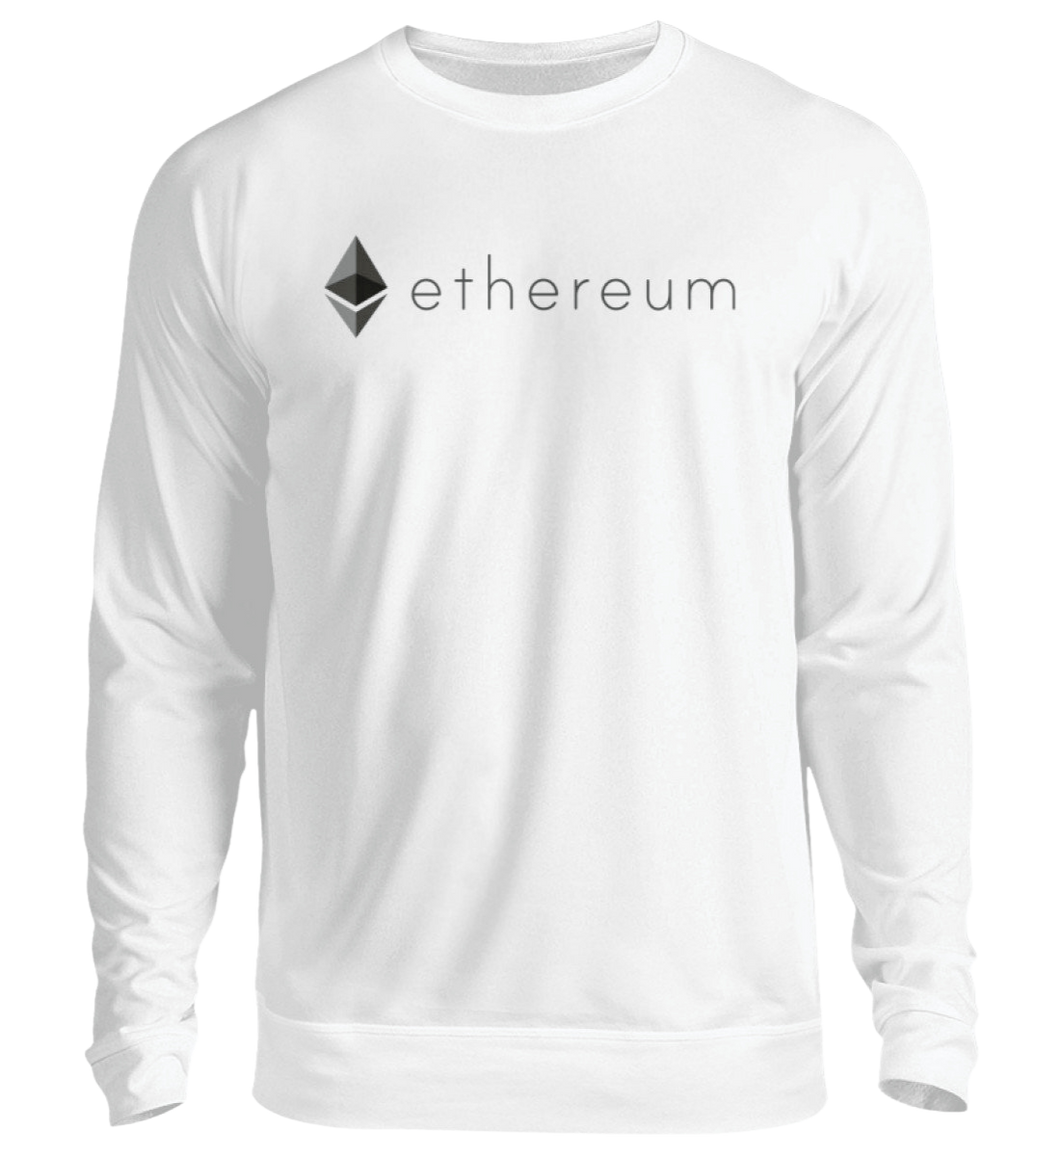 Ethereum Sweatshirt